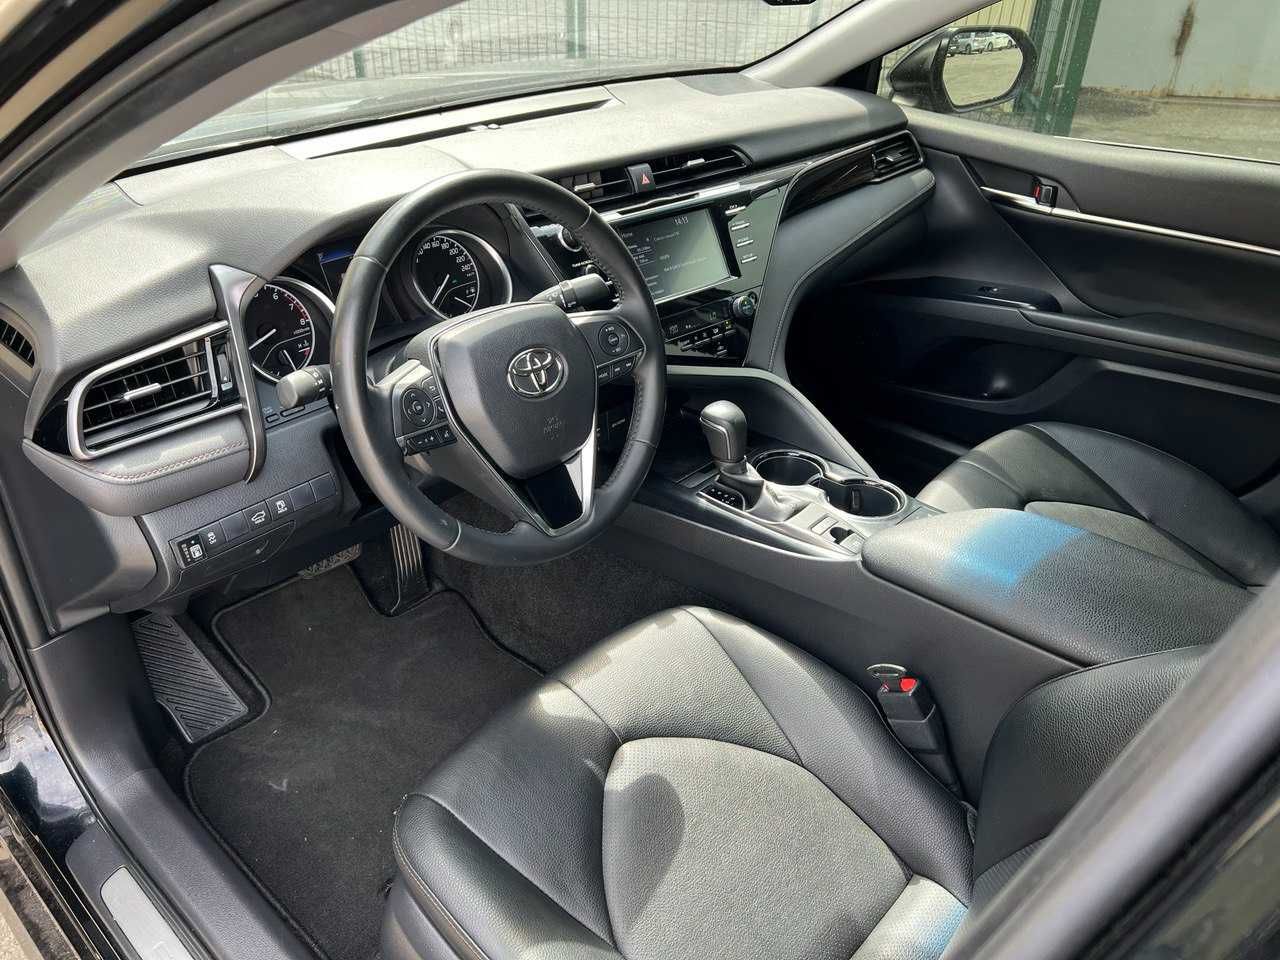 Aренда автомобиля прокат автомобиля Киев Toyota Camry 2020